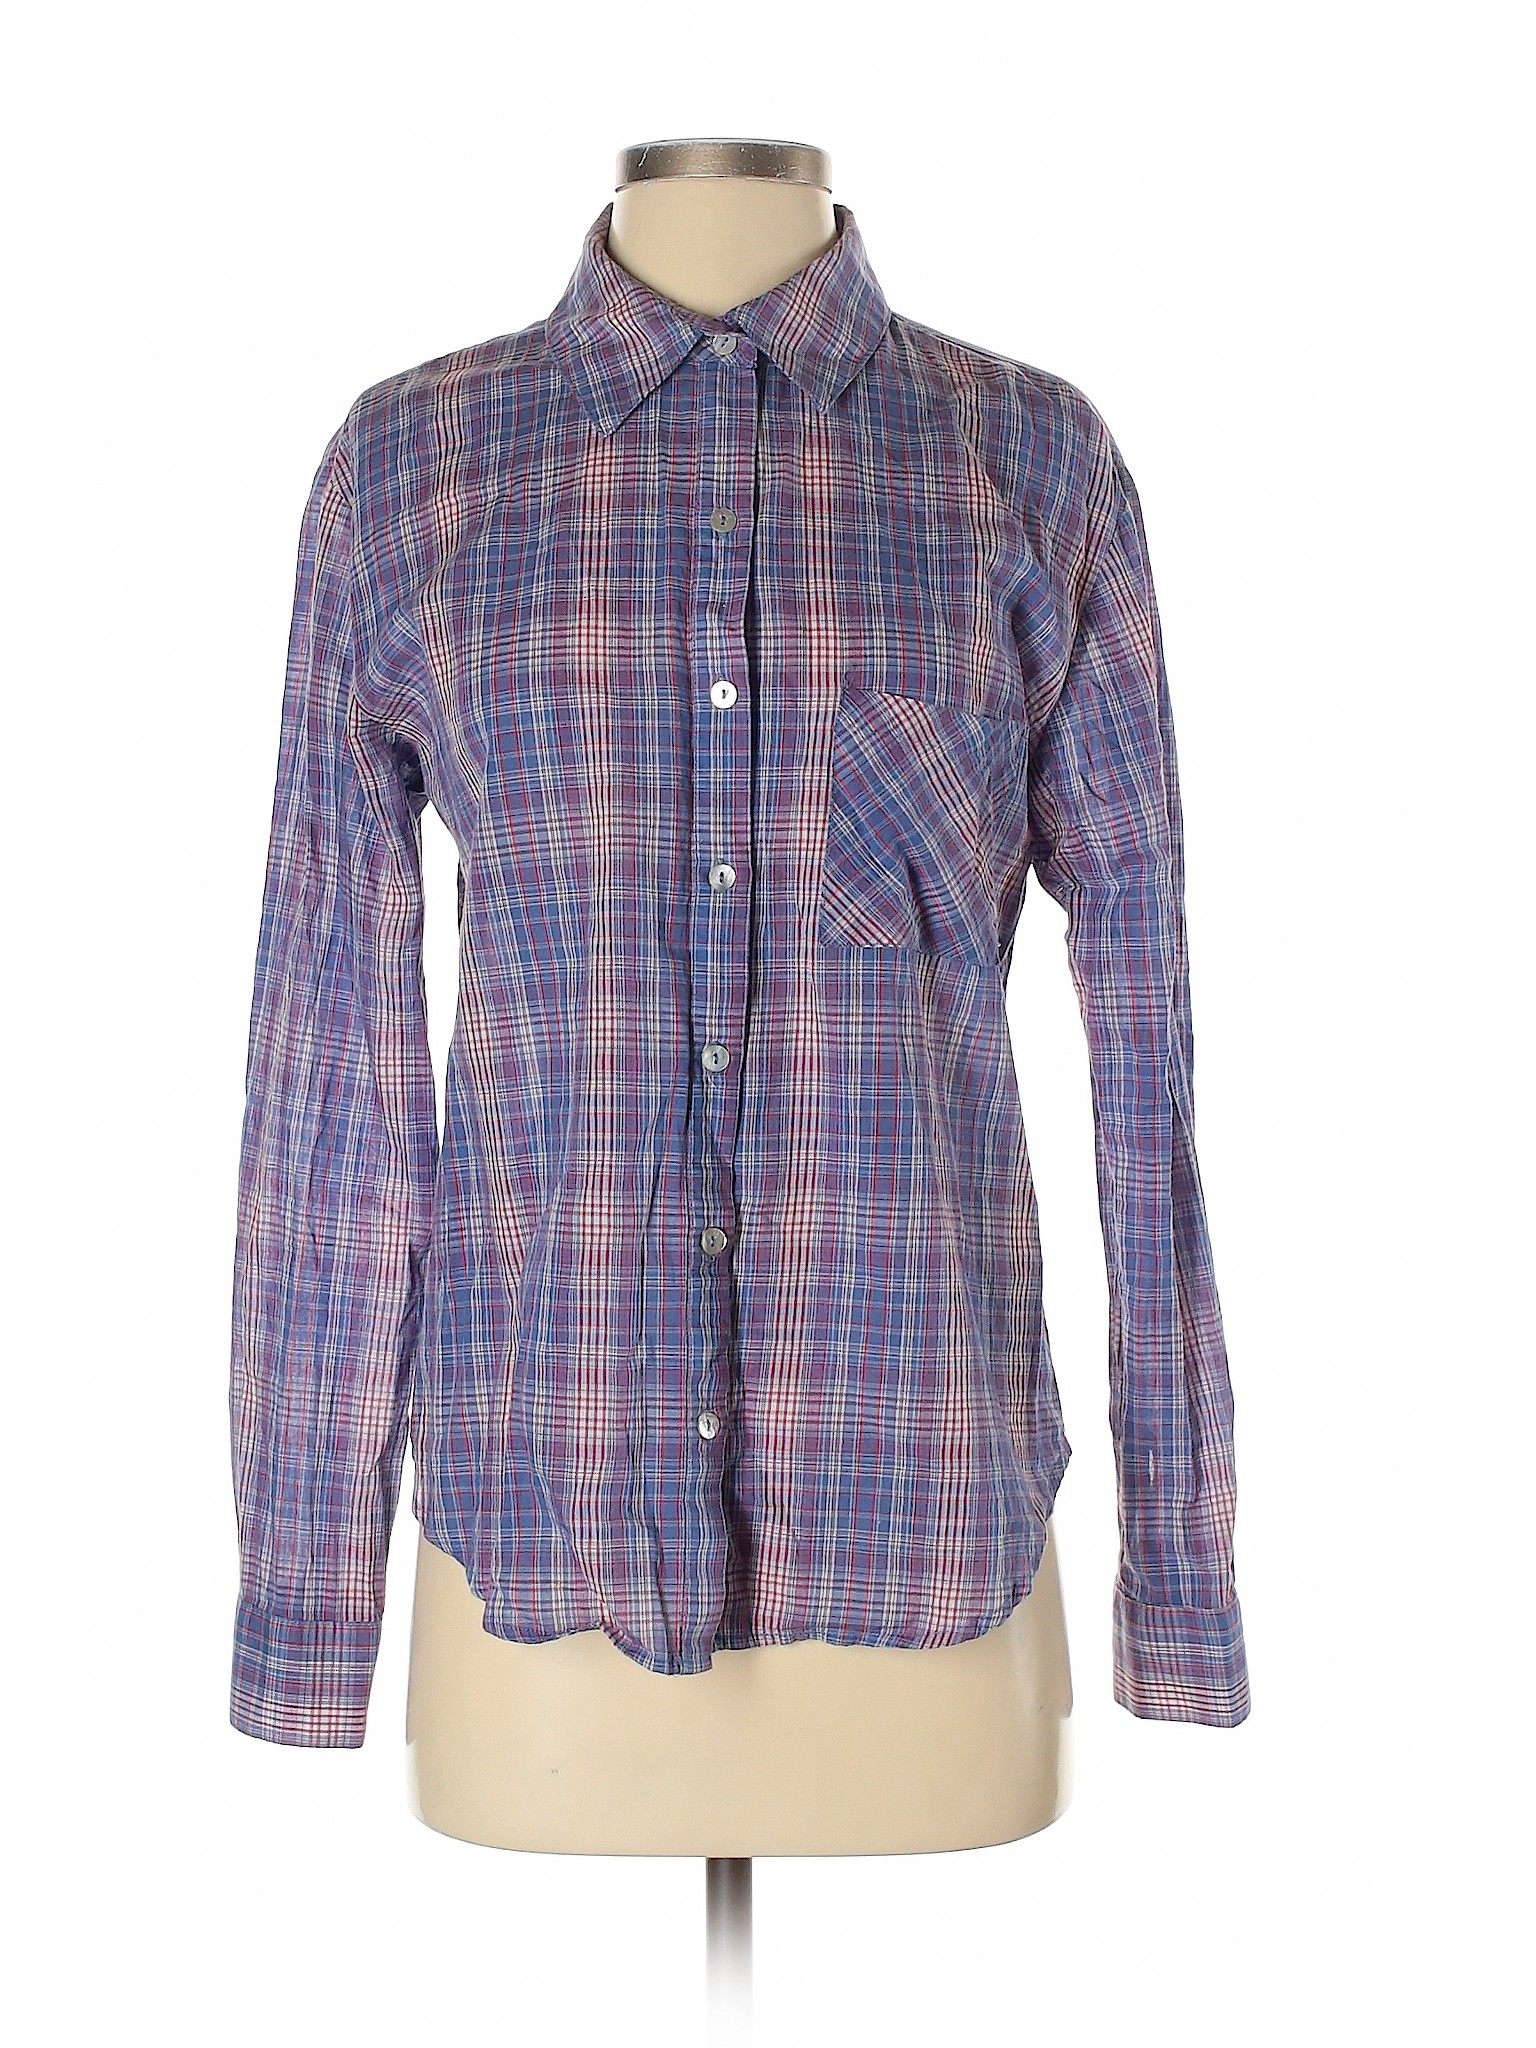 StyleMint Women Purple Long Sleeve Button-Down Shirt S | eBay